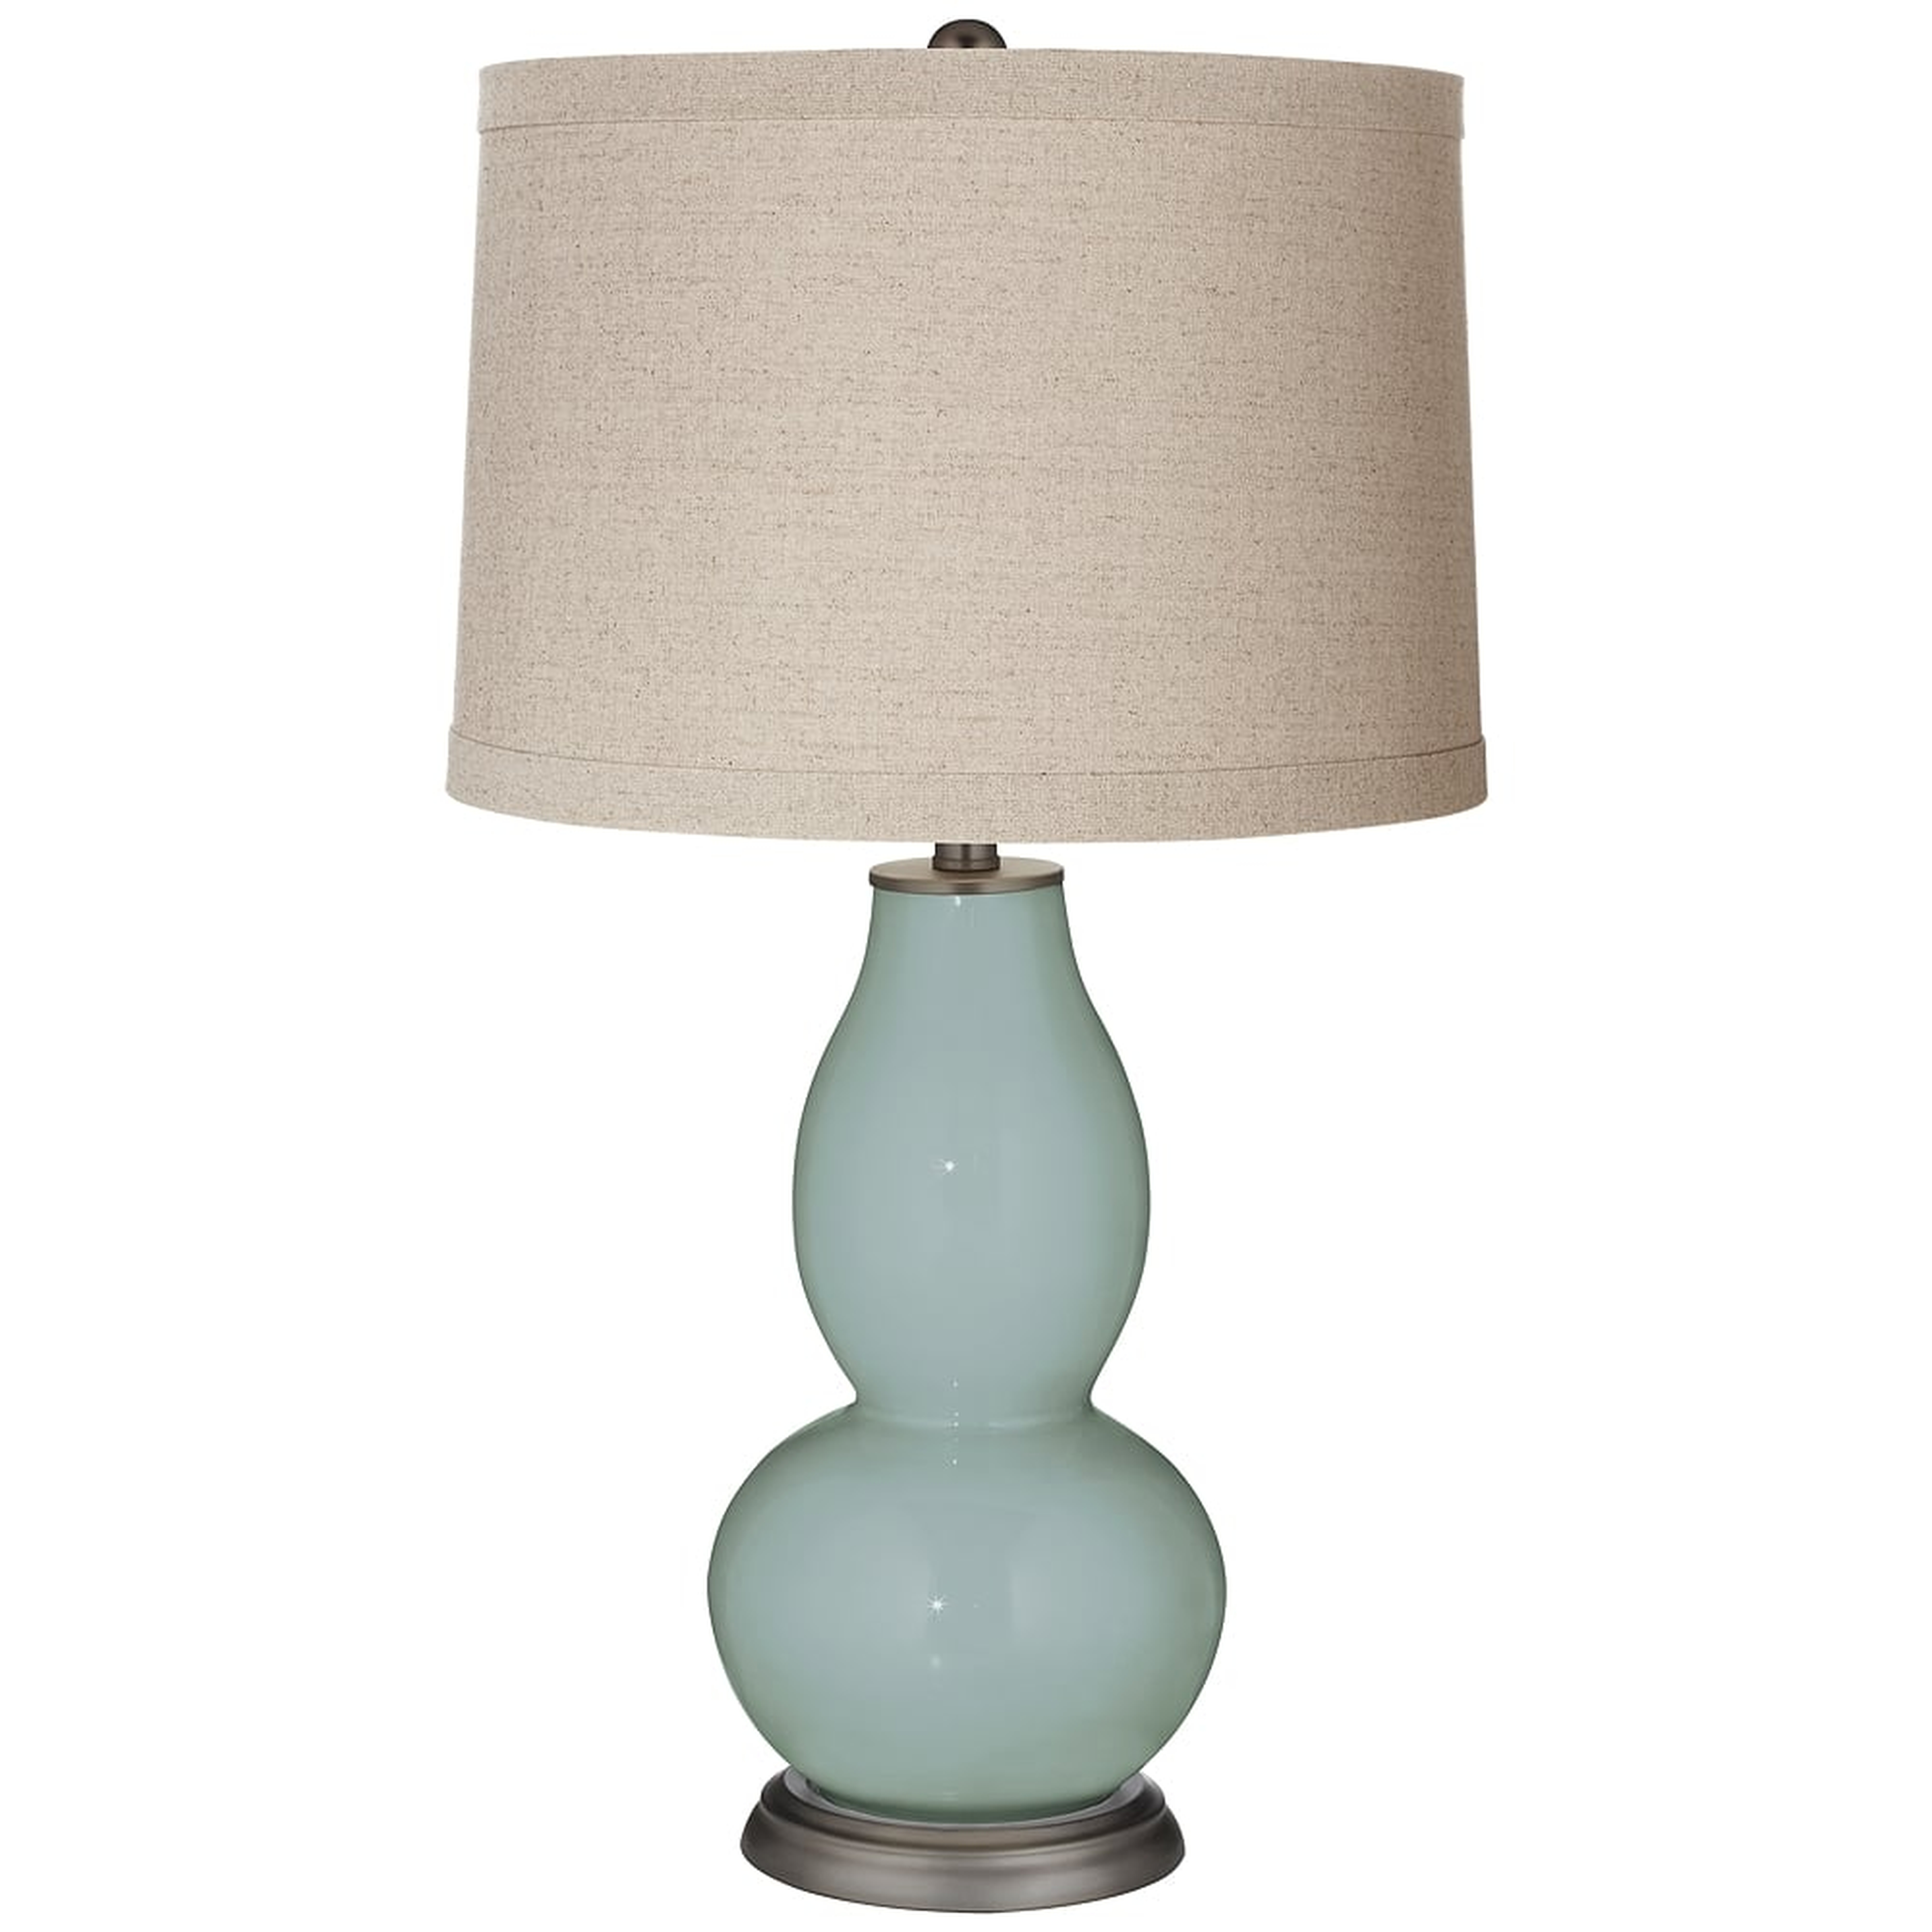 Aqua-Sphere Linen Drum Shade Double Gourd Table Lamp - Style # 53G99 - Lamps Plus